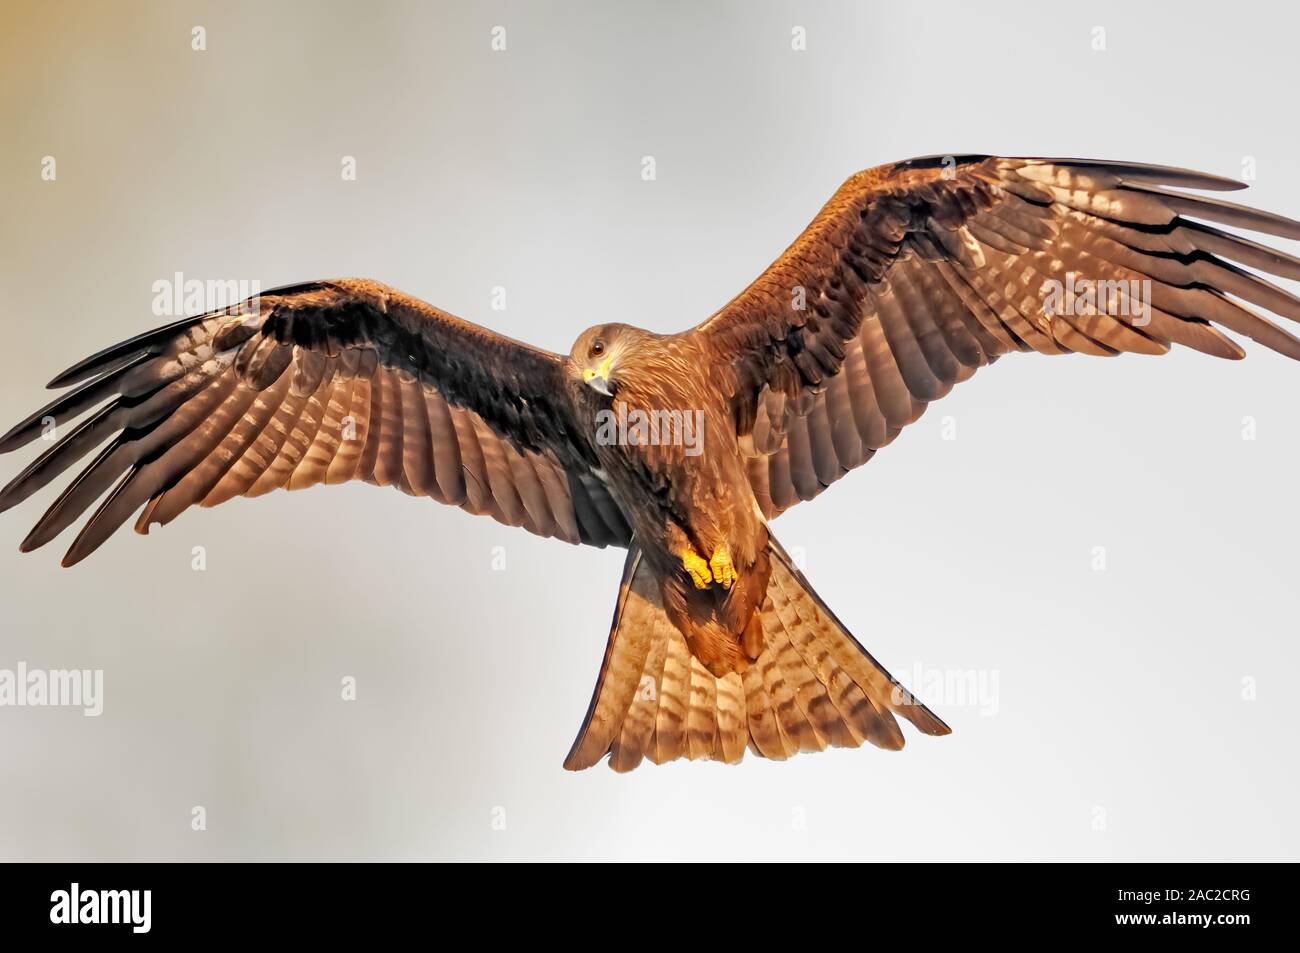 Black kite showing its full wingspan during flight Stock Photo